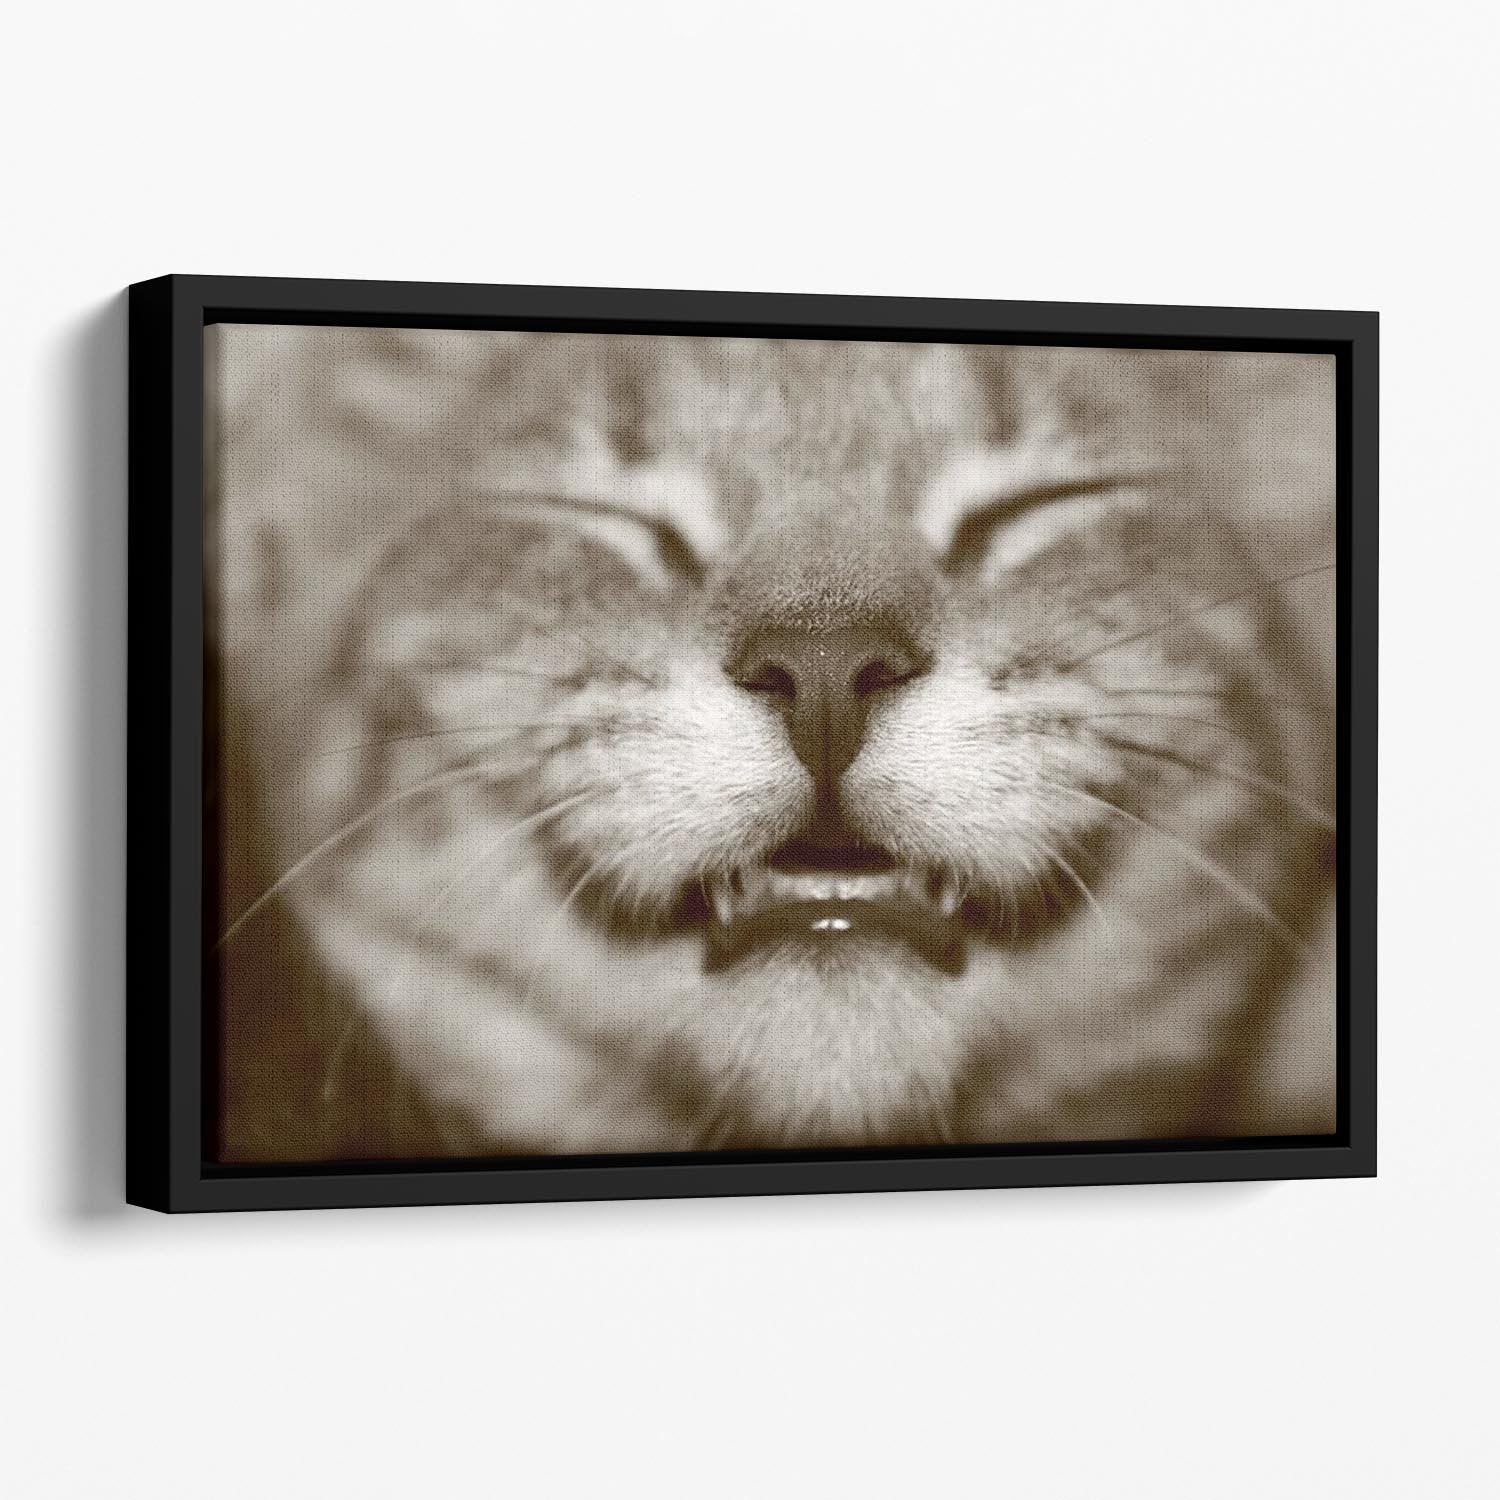 A smiling kitten Floating Framed Canvas - Canvas Art Rocks - 1